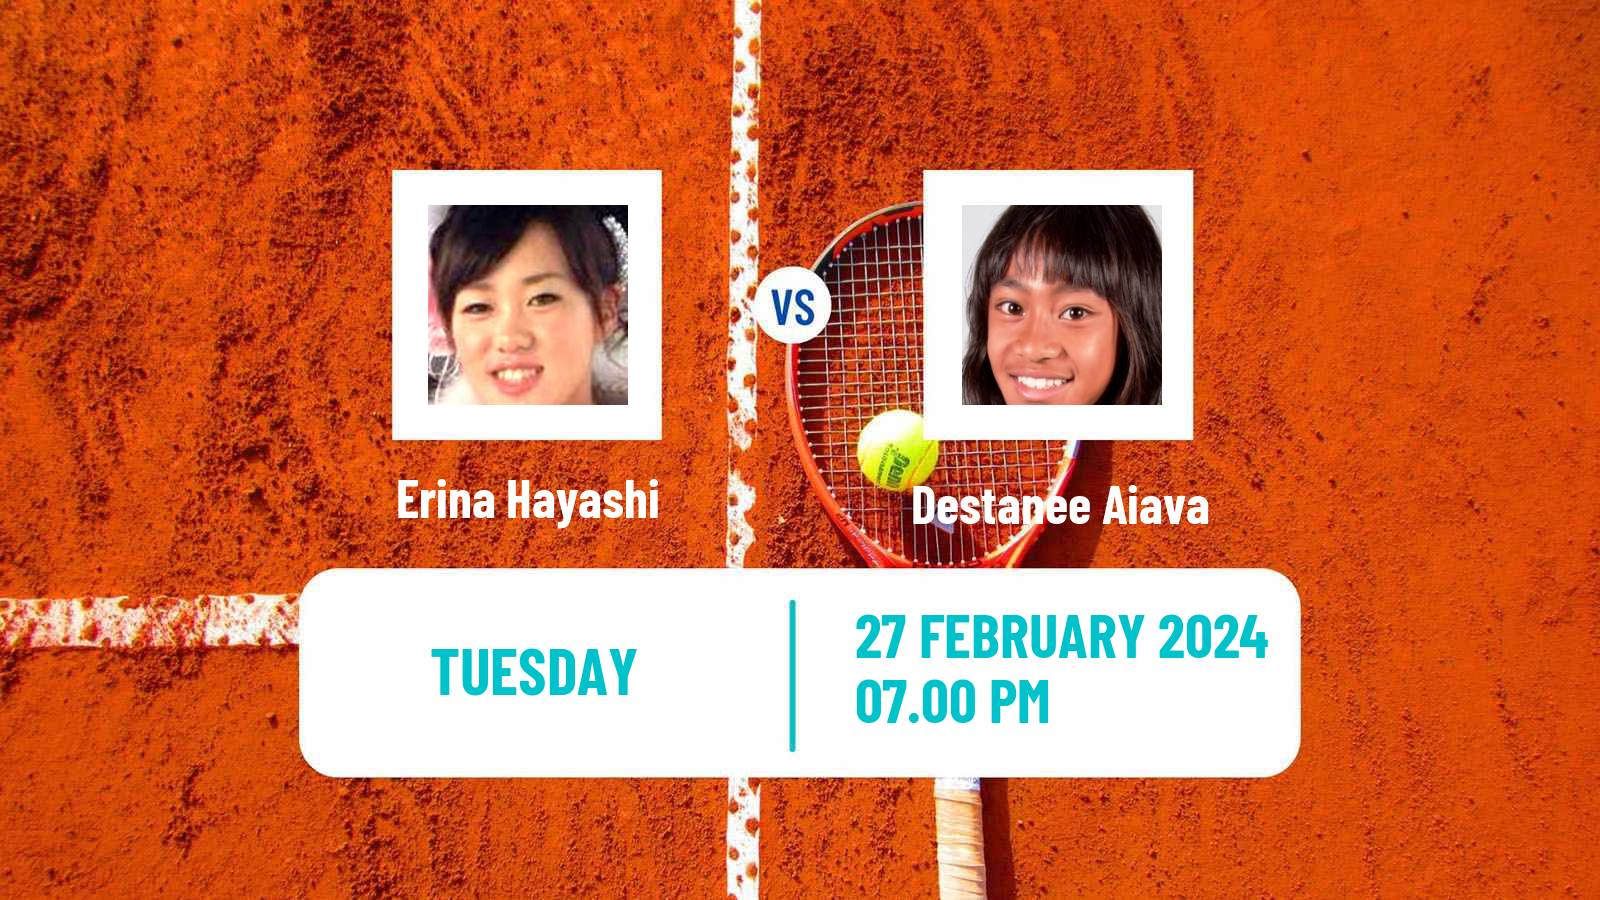 Tennis ITF W35 Traralgon 2 Women Erina Hayashi - Destanee Aiava